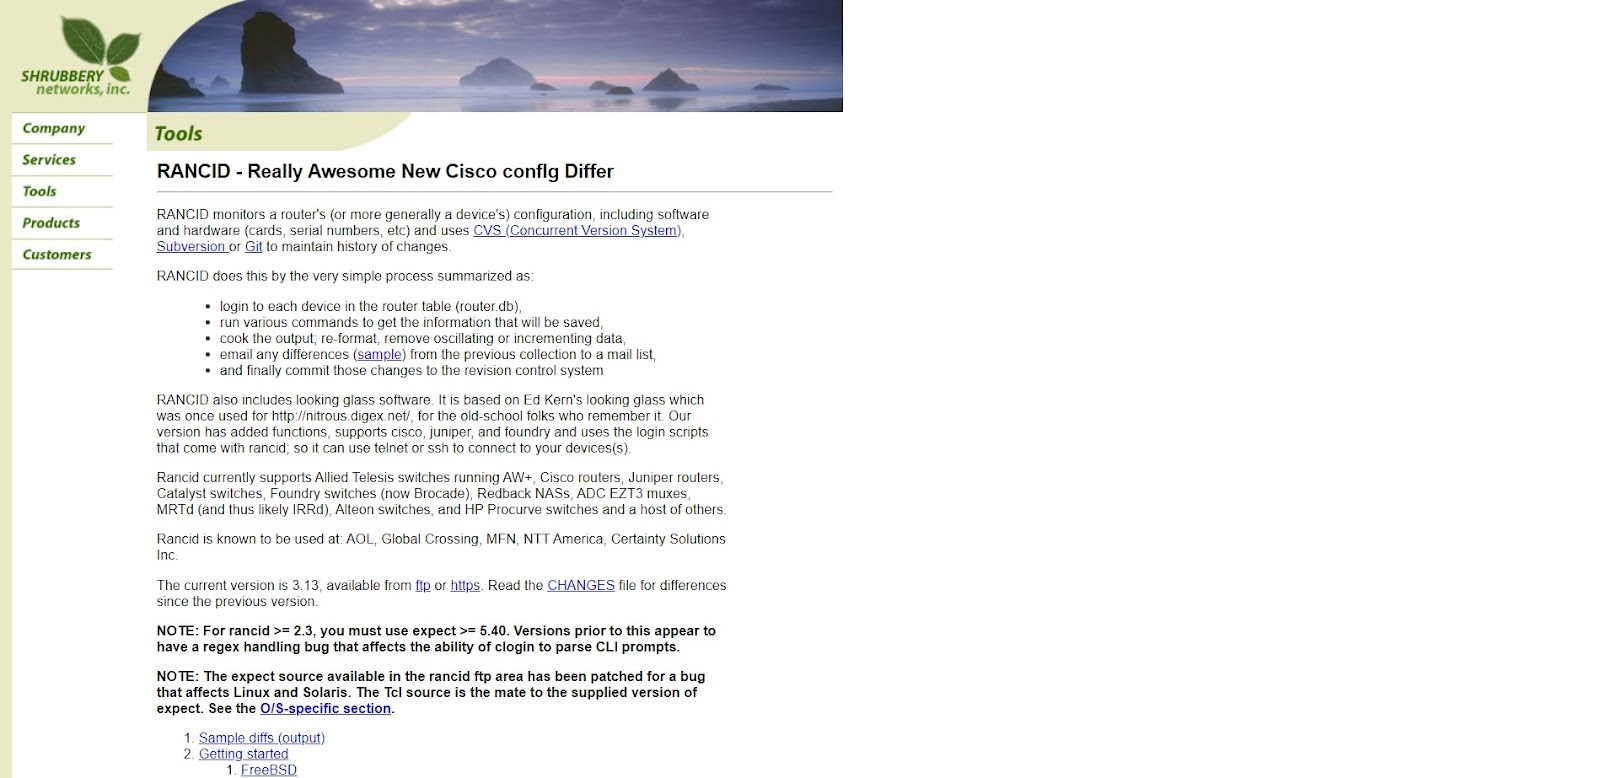 A screenshot of Rancid's website